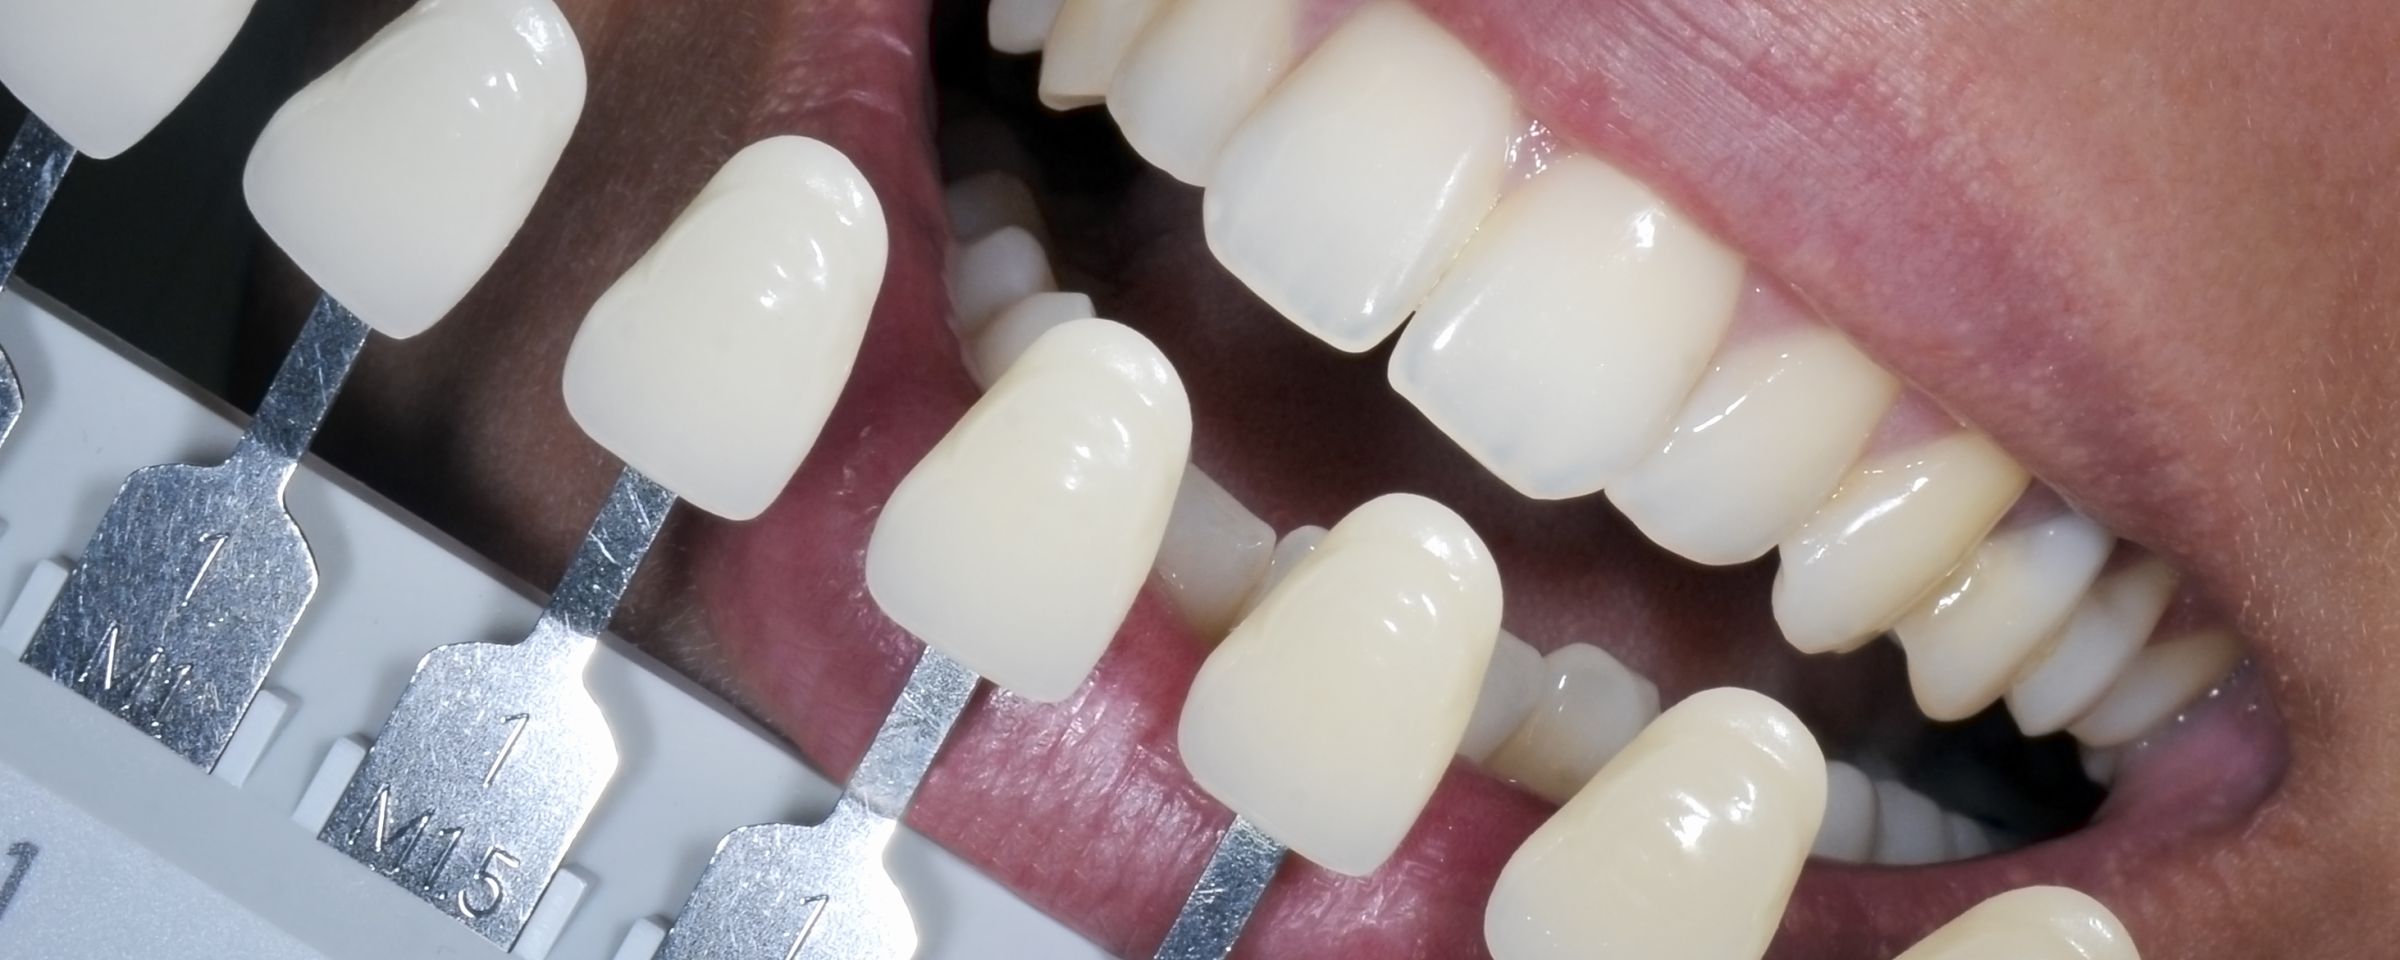 Ultimate Teeth Whitening Packages